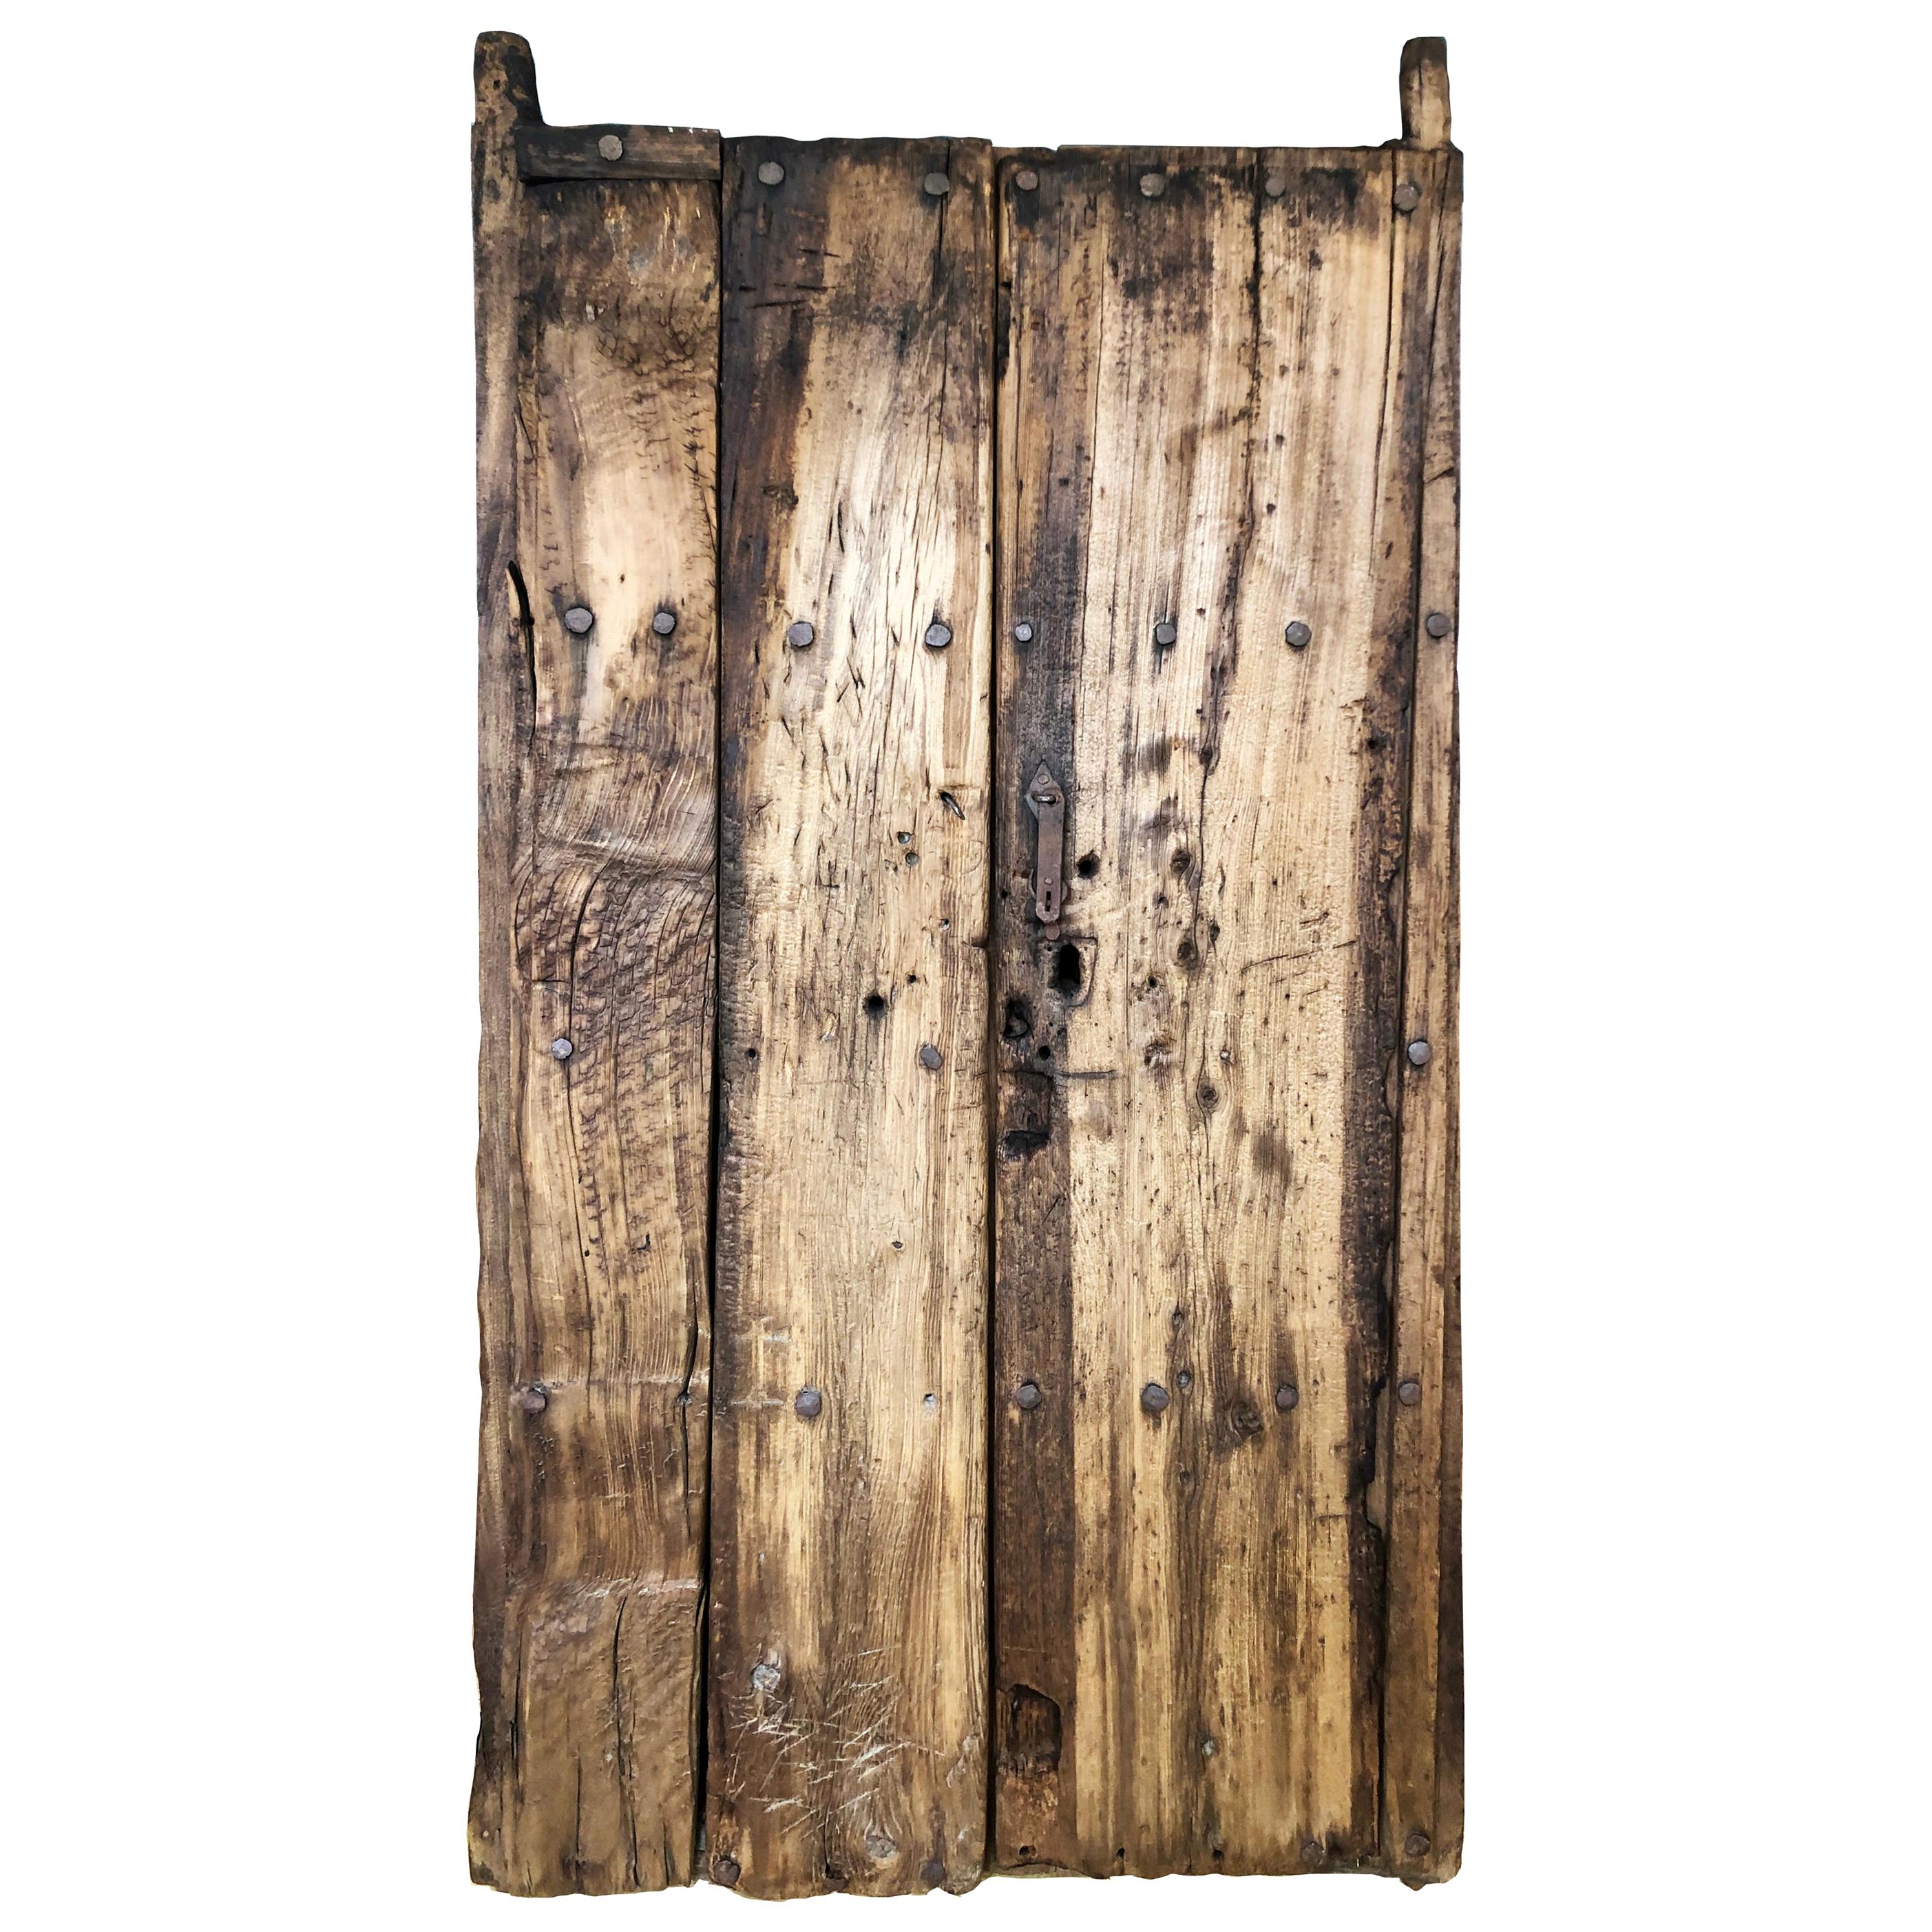 19th Century Sabino Wood Door Found in Western México